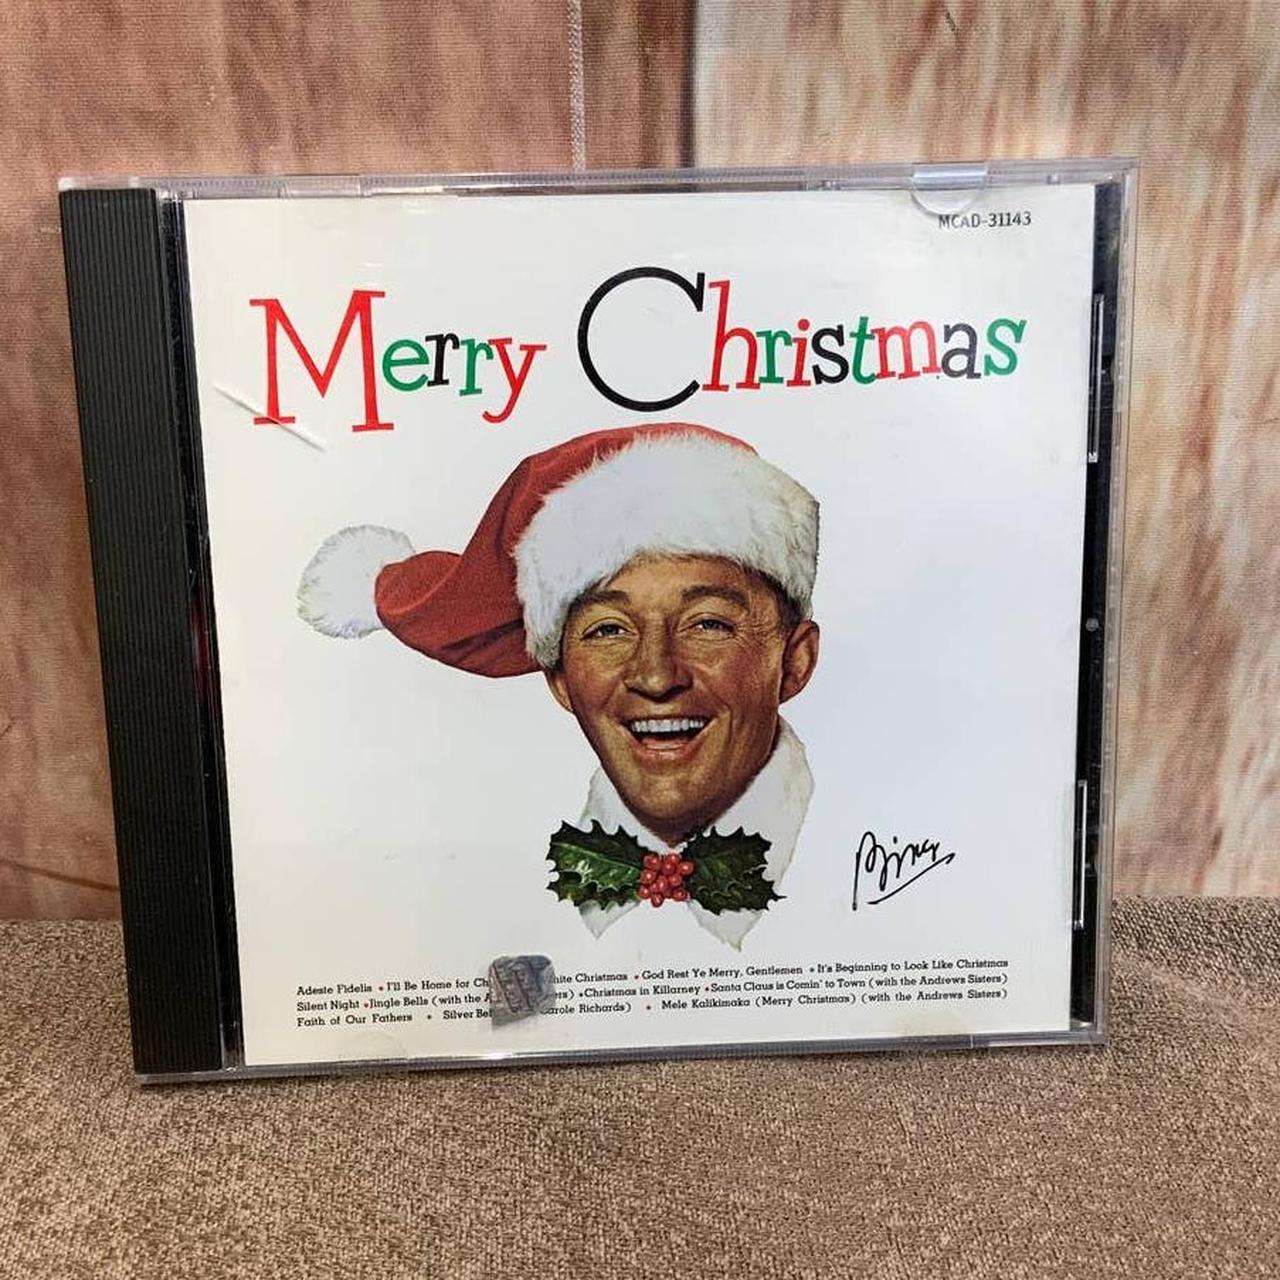  It's Christmas Time: CDs & Vinyl